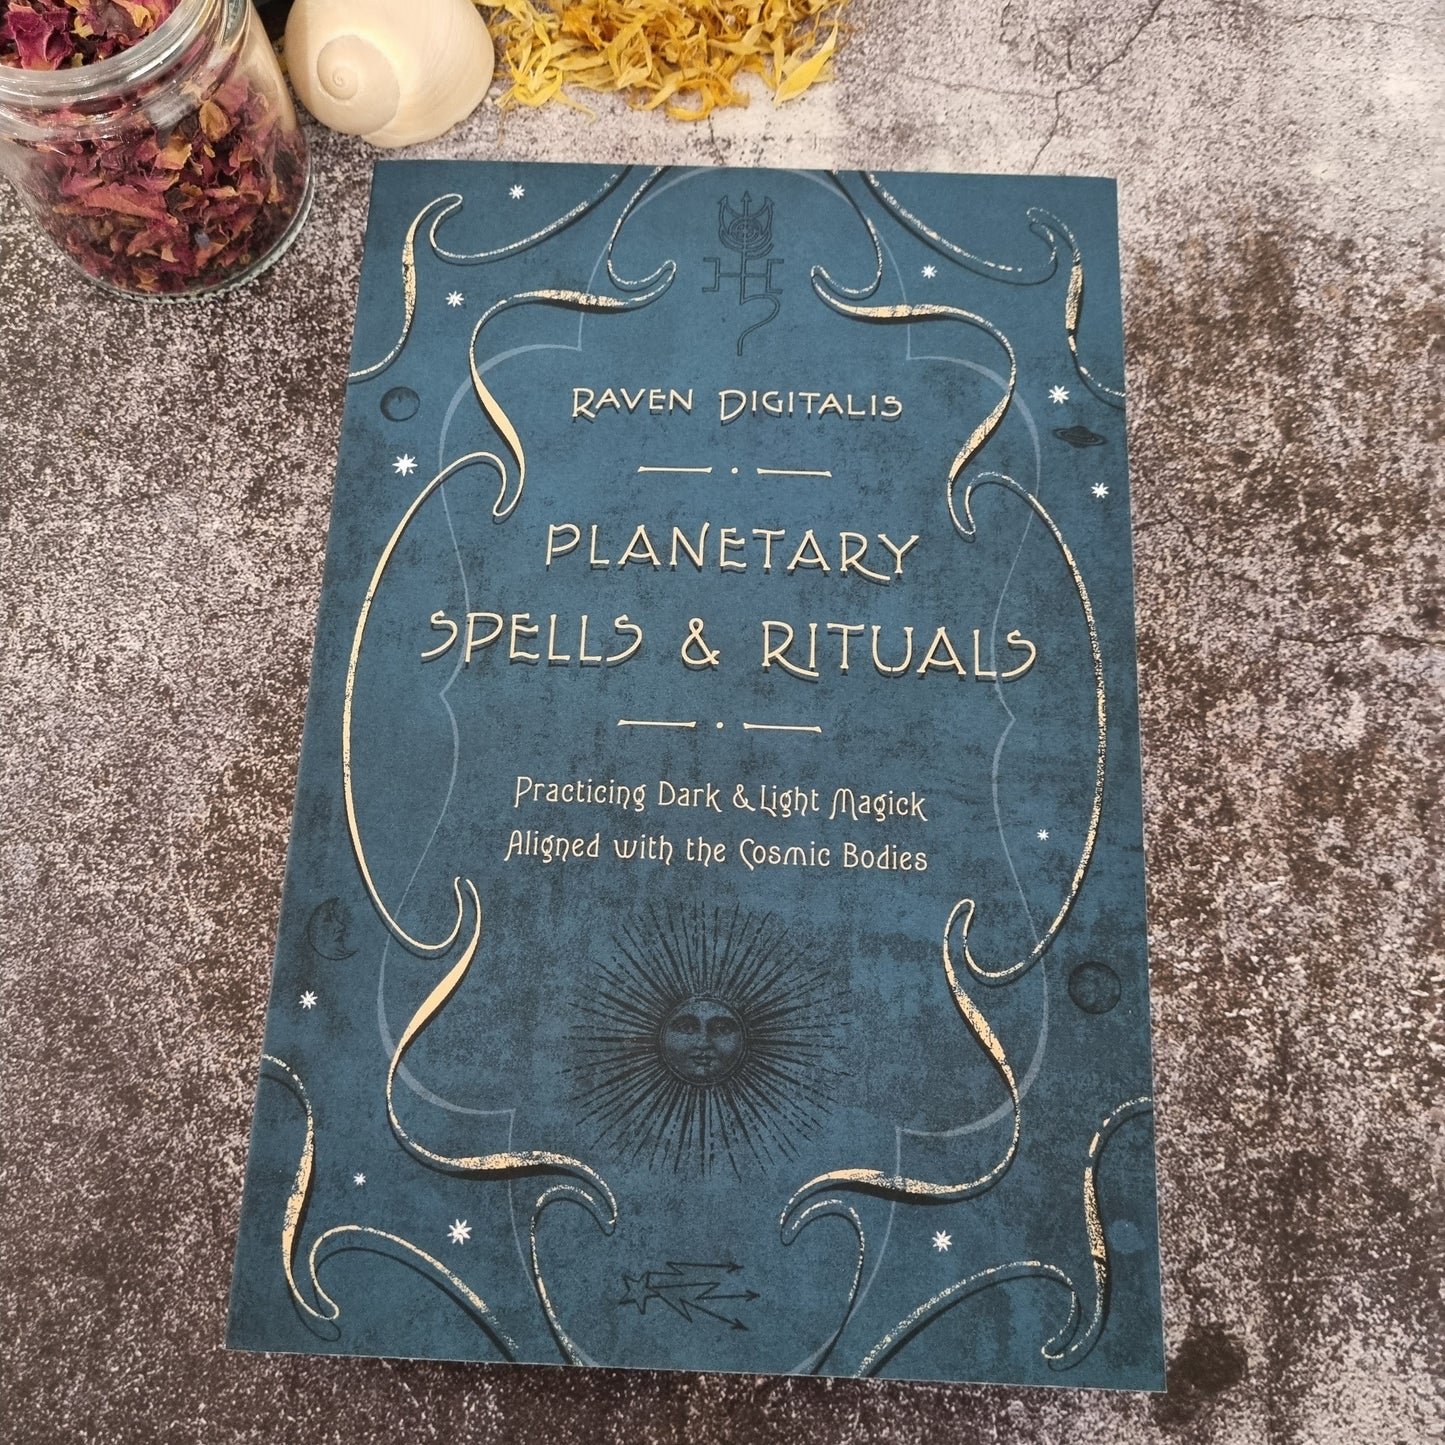 Planetary Spells & Rituals